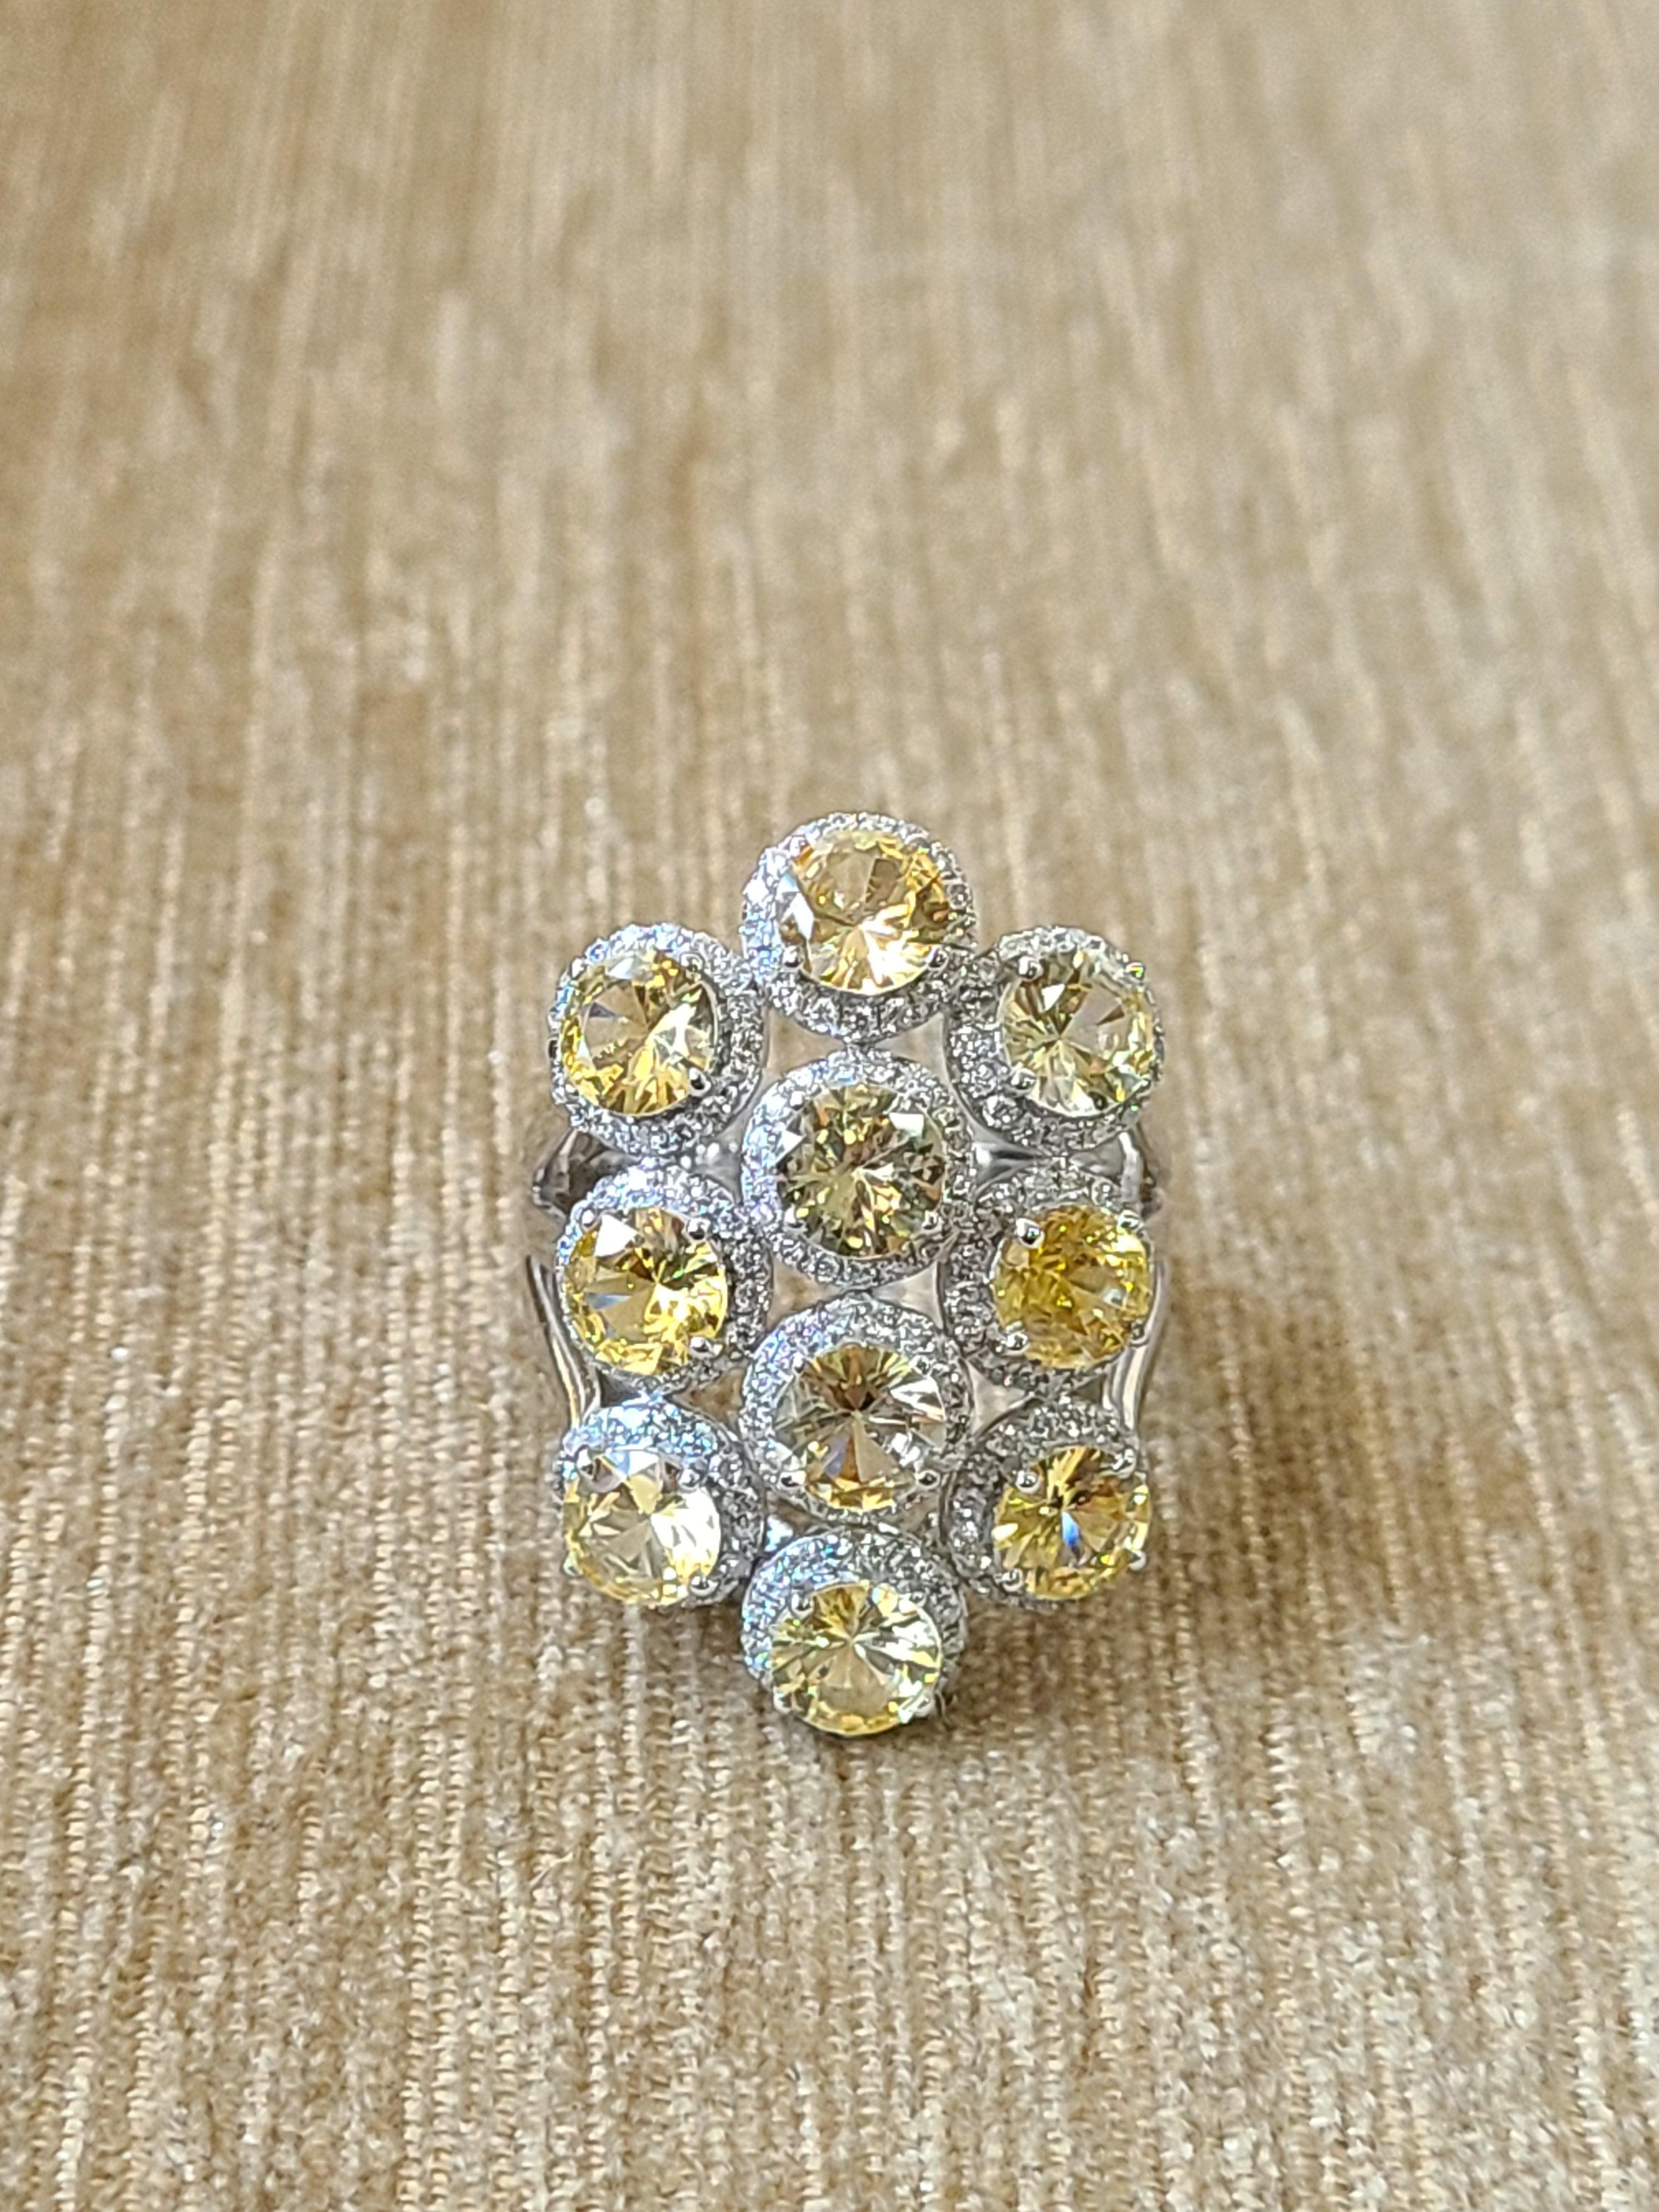 Natural Yellow Sapphire and Diamond Ring Set in 18 Karat Gold 1